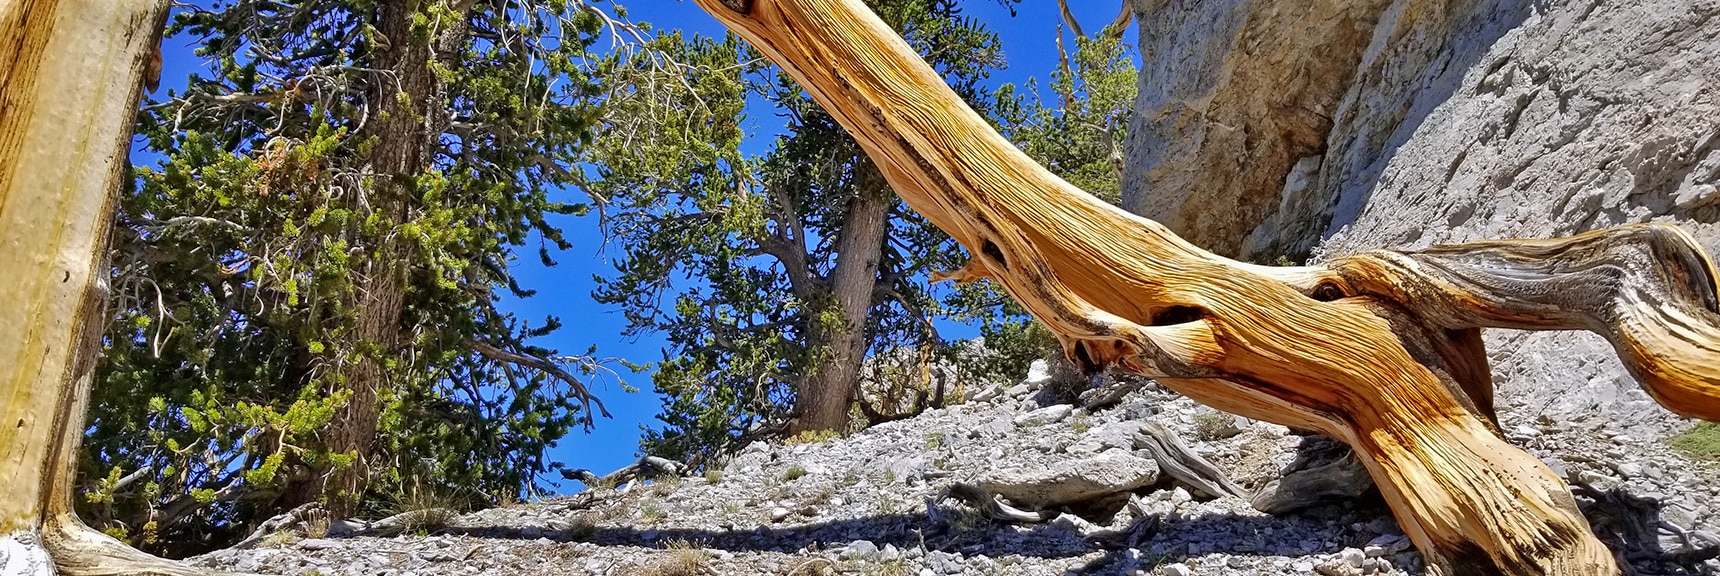 Bonanza Trail Near McFarland Peak. Amazing Bristlecone Pine Sculptures | Base of McFarland Peak via Bristlecone Pine Trail and Bonanza Trail | Lee Canyon | Spring Mountains, Nevada